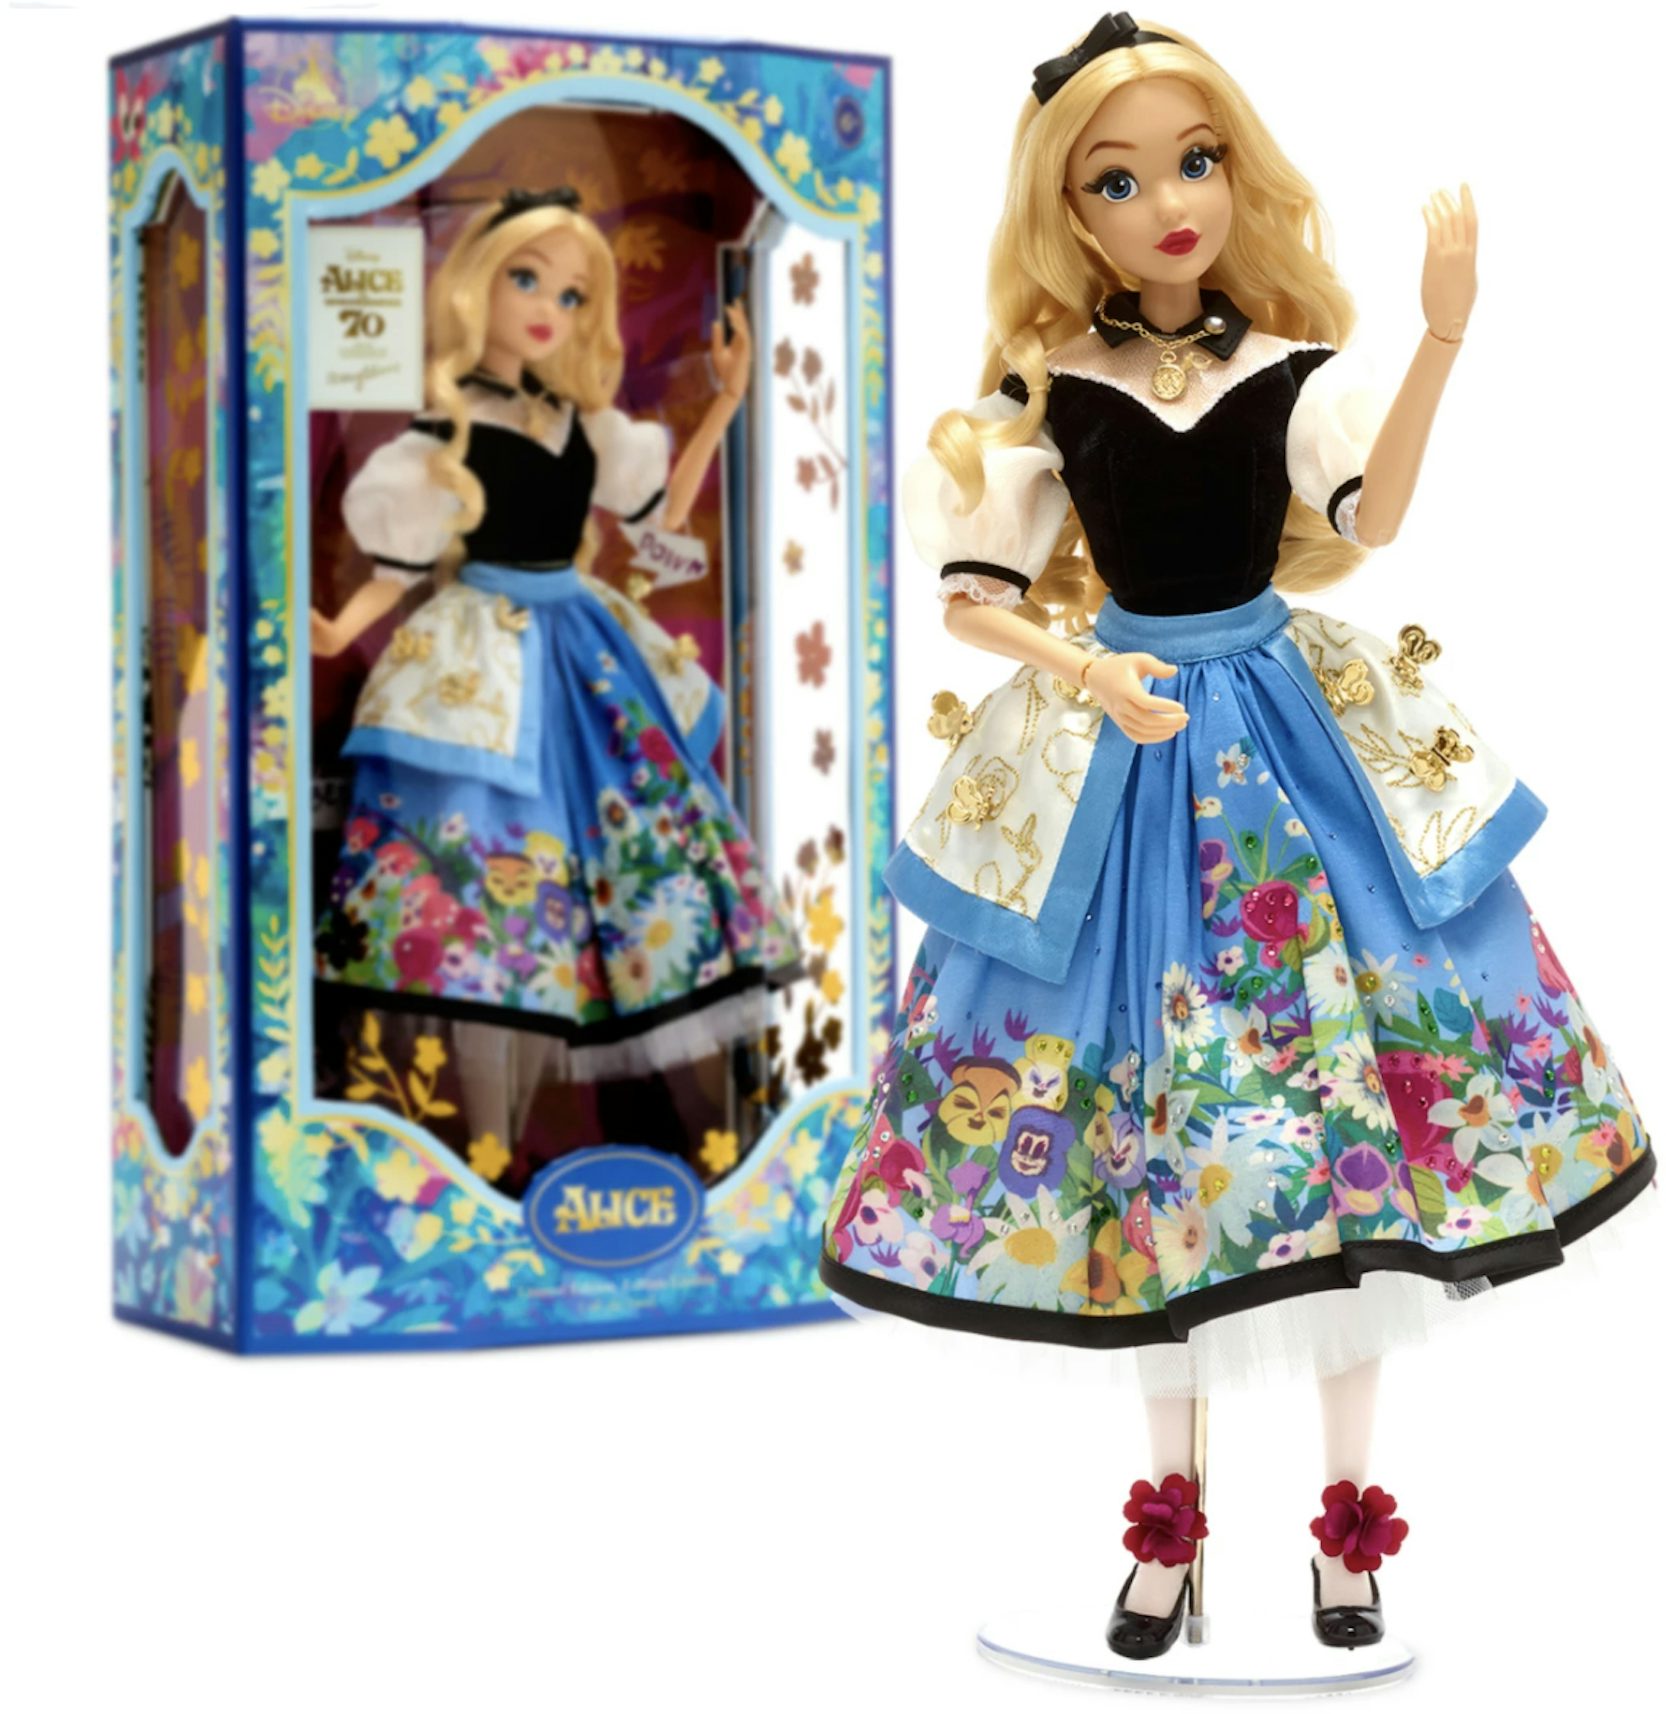 Alice in wonderland barbie